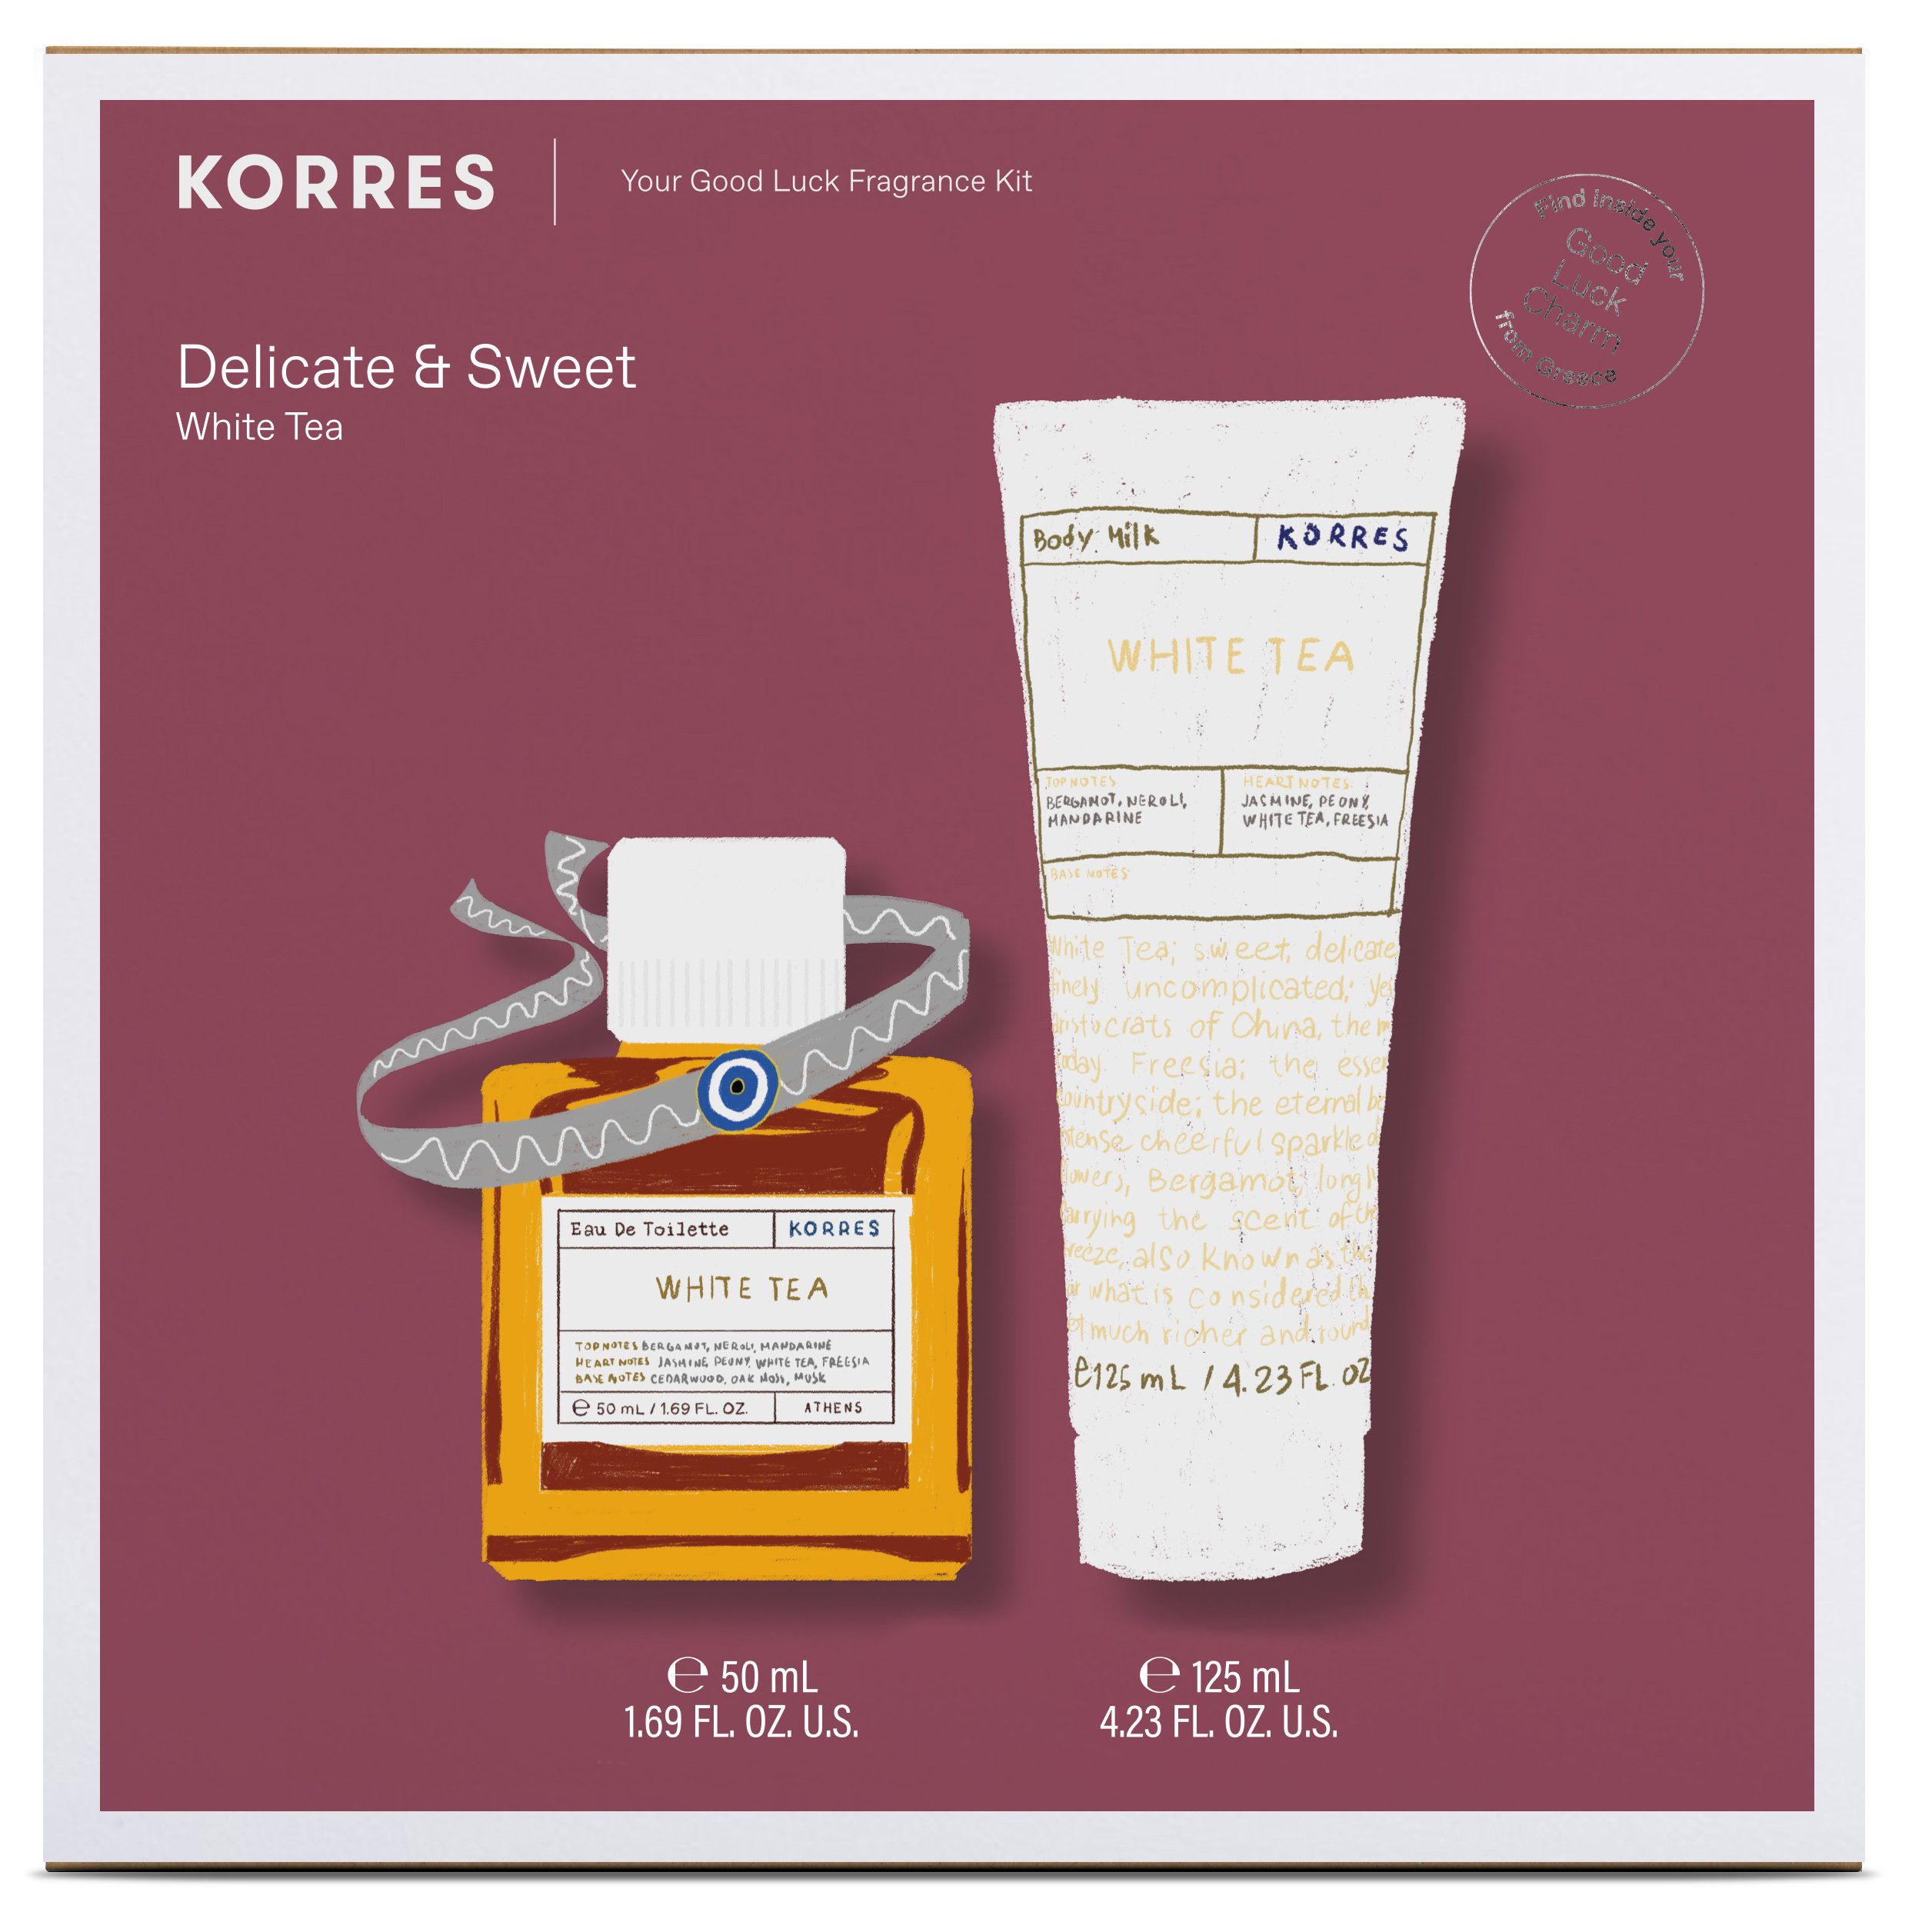 Korres Promo Delicate & Sweet White Tea Eau De Toilette 50ml & Body Milk White Tea 125ml & Δώρο Good Luck Charm Βραχιόλι